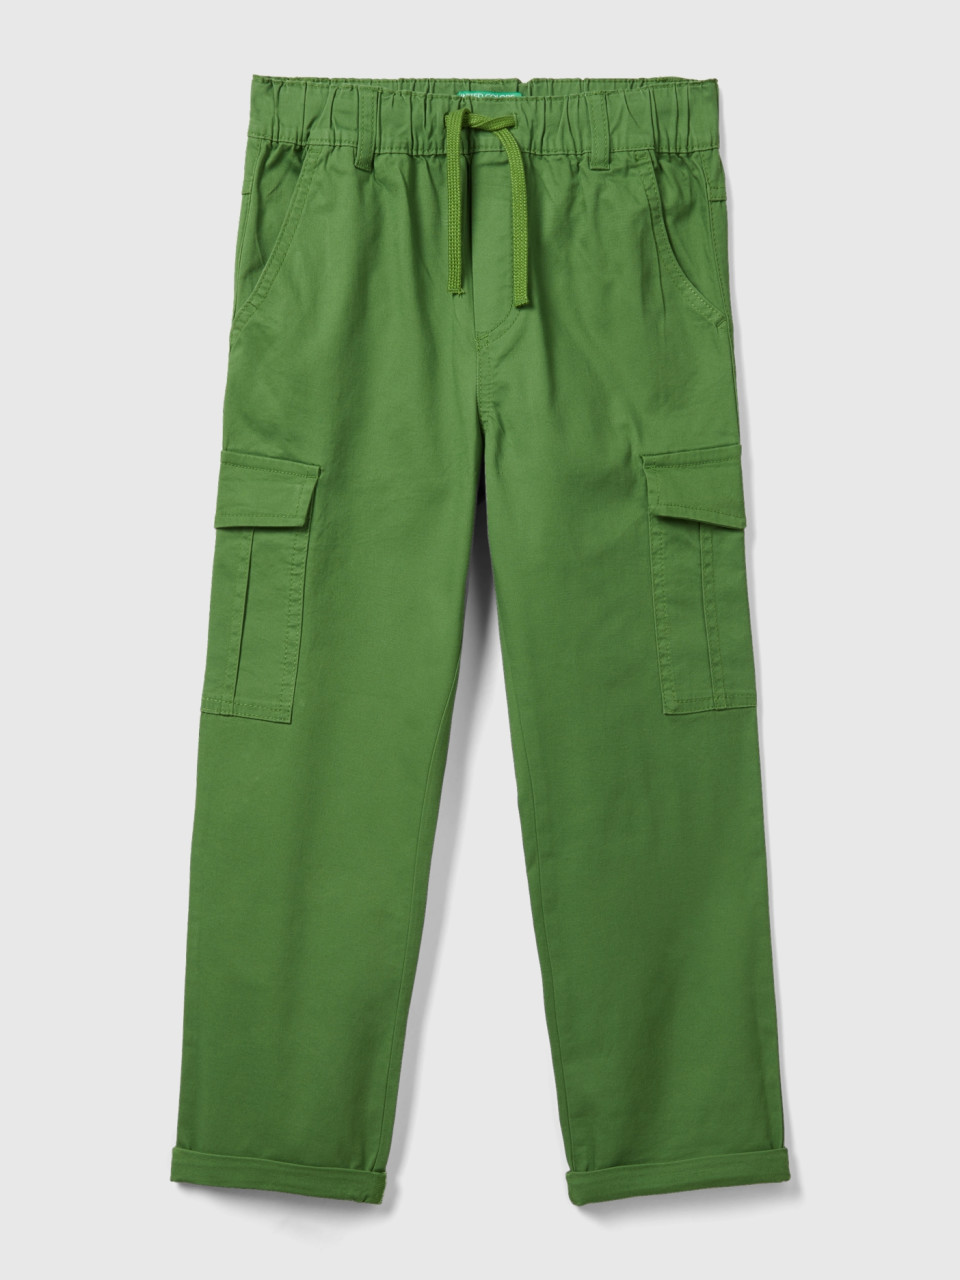 Benetton, Straight Leg Cargo Trousers, Military Green, Kids